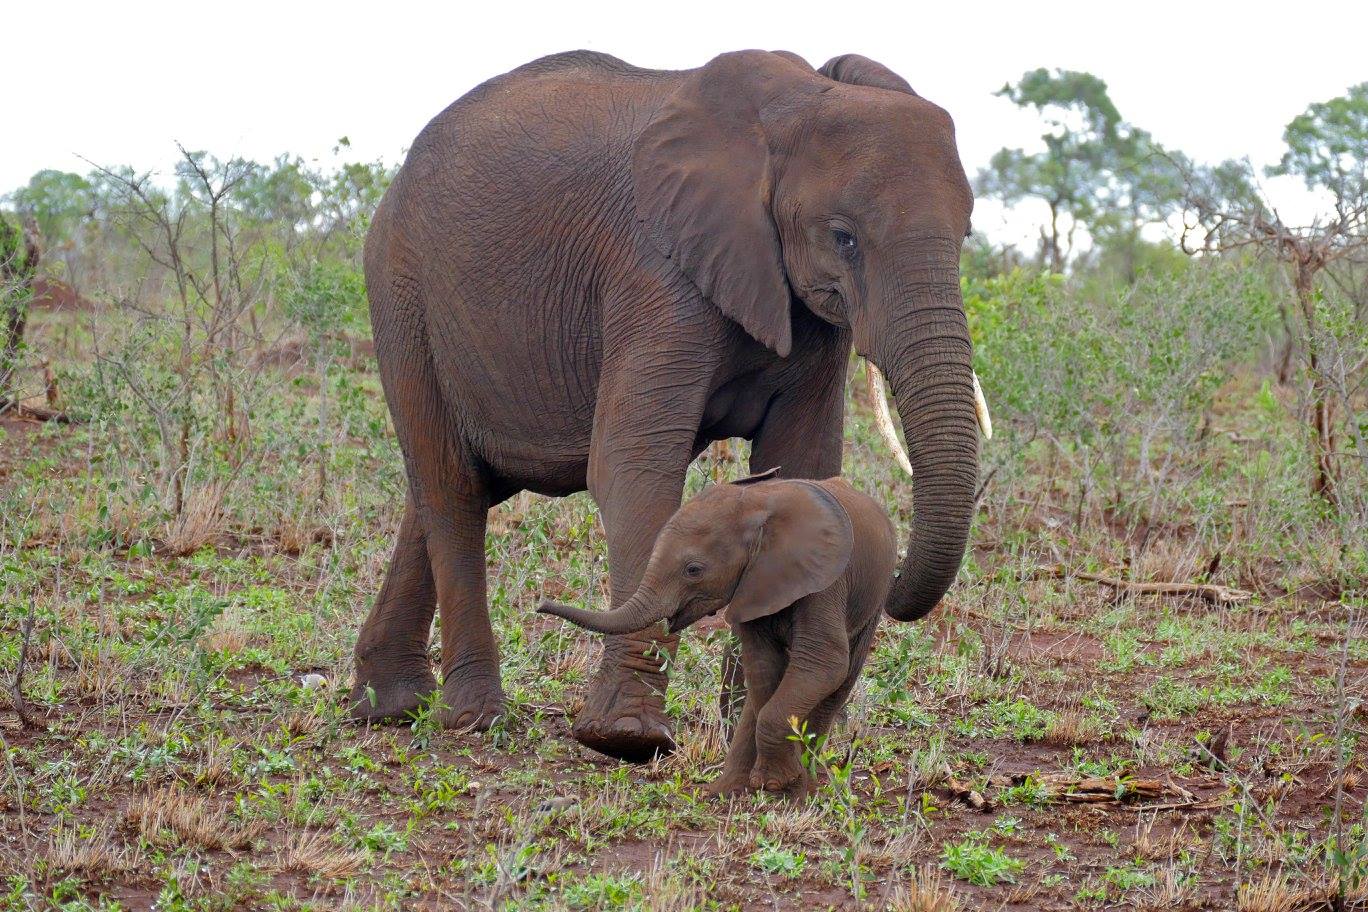 Savanna Elephants (Loxodonta africana) mother and young. Image credit: Bernard Dupont, CC by 2.0